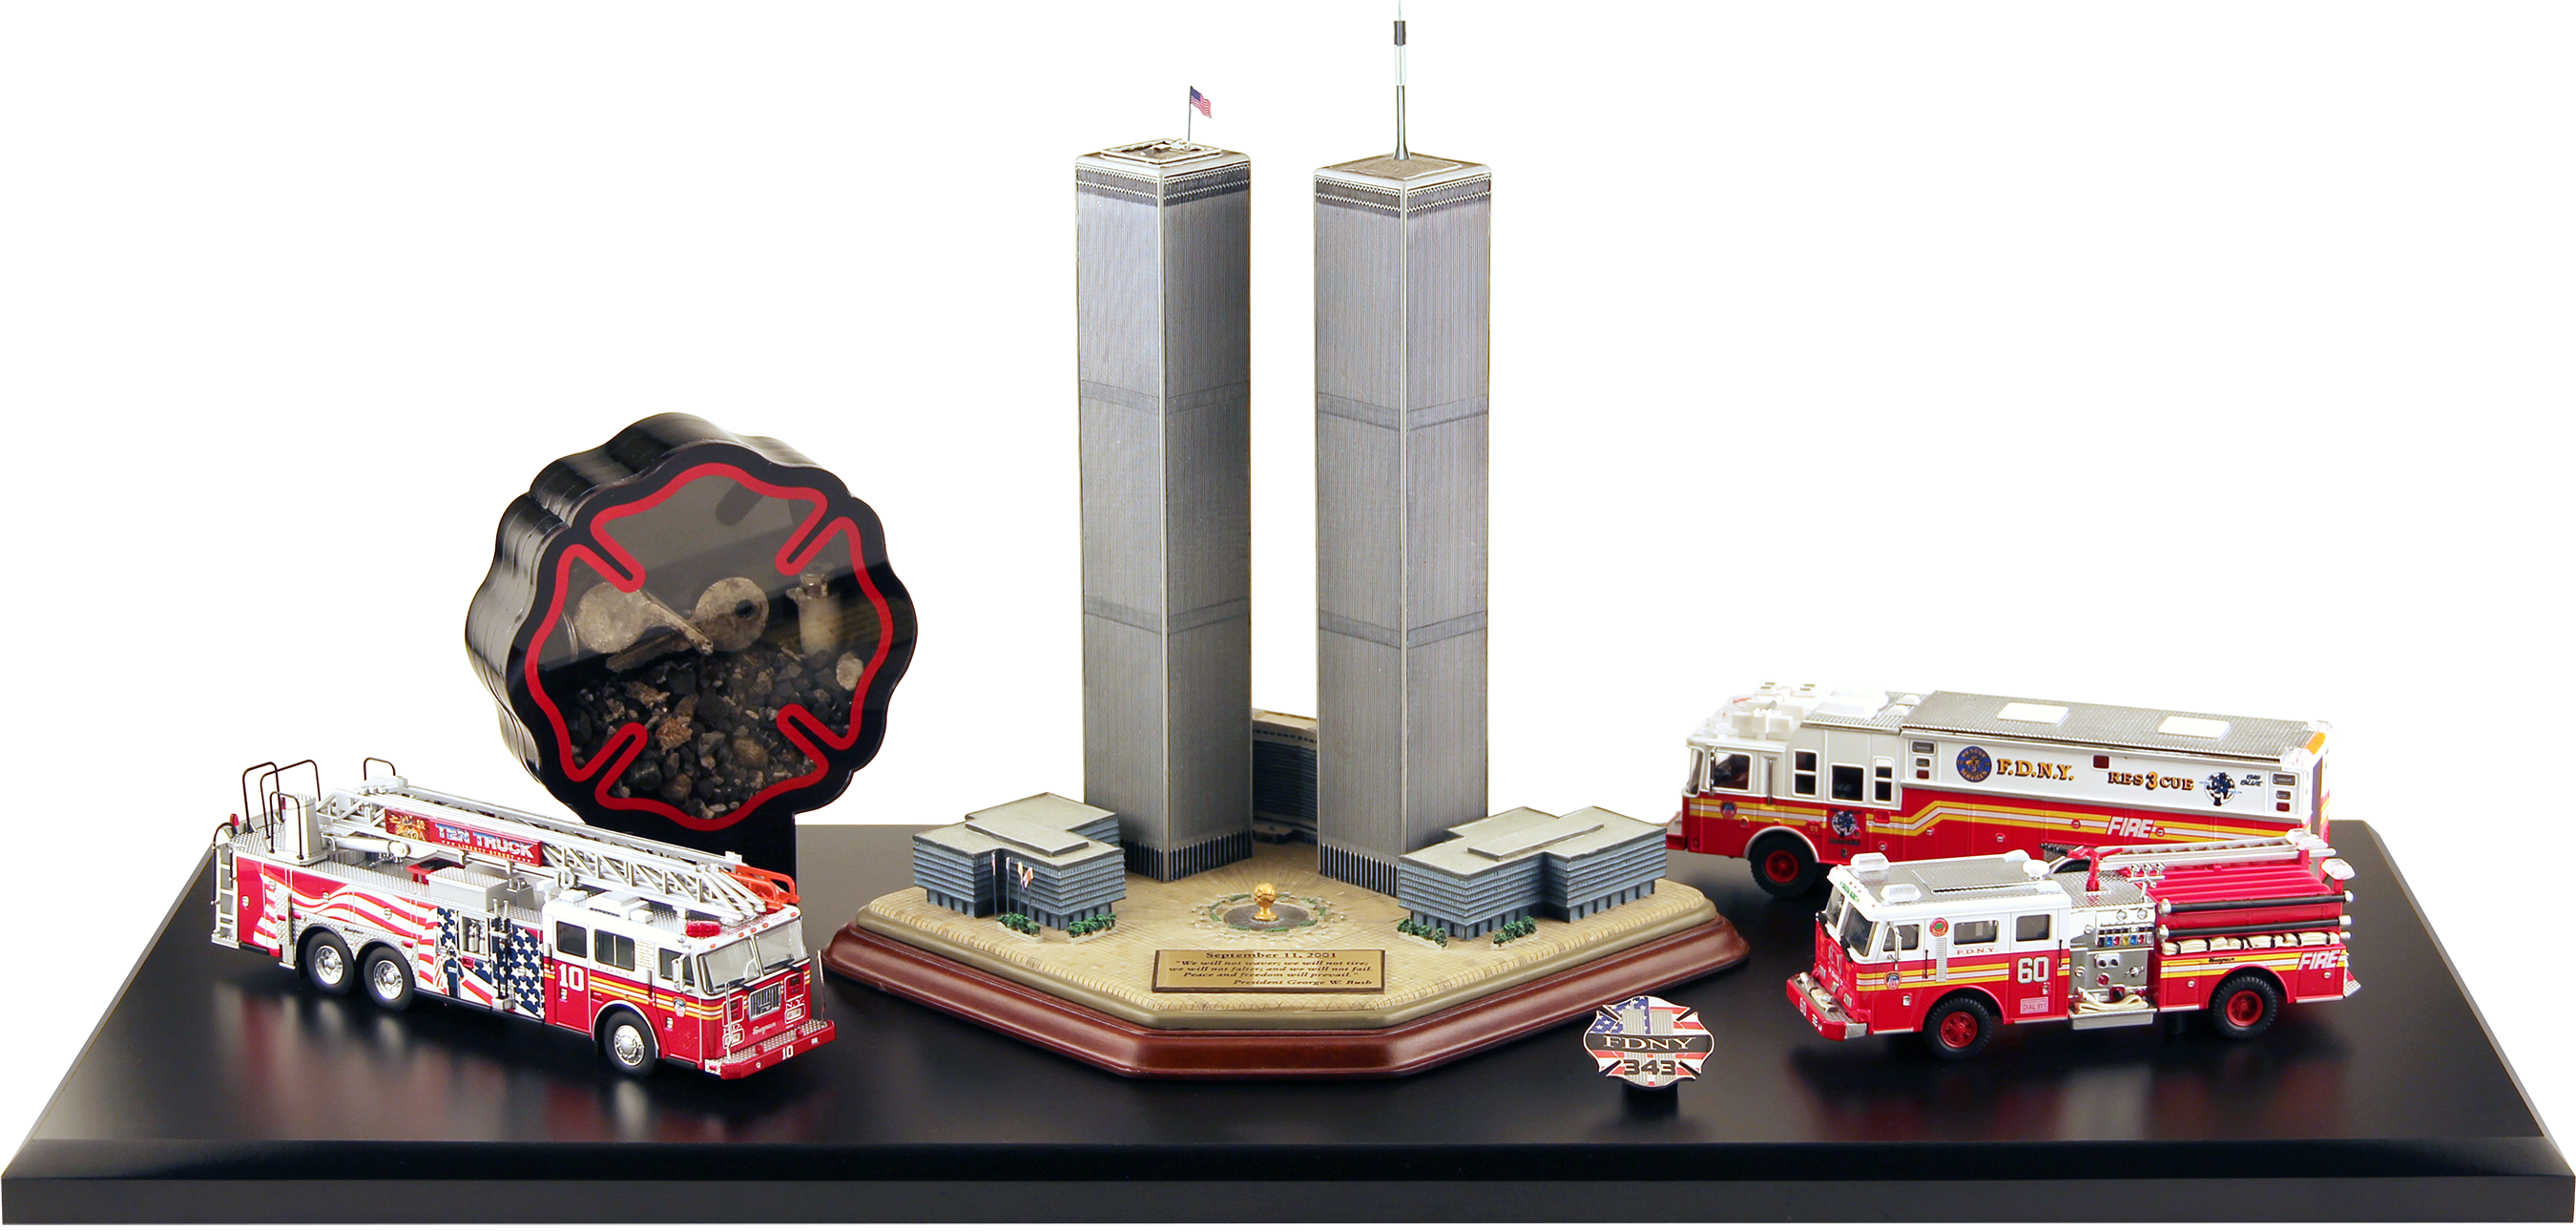 9/11 honor display